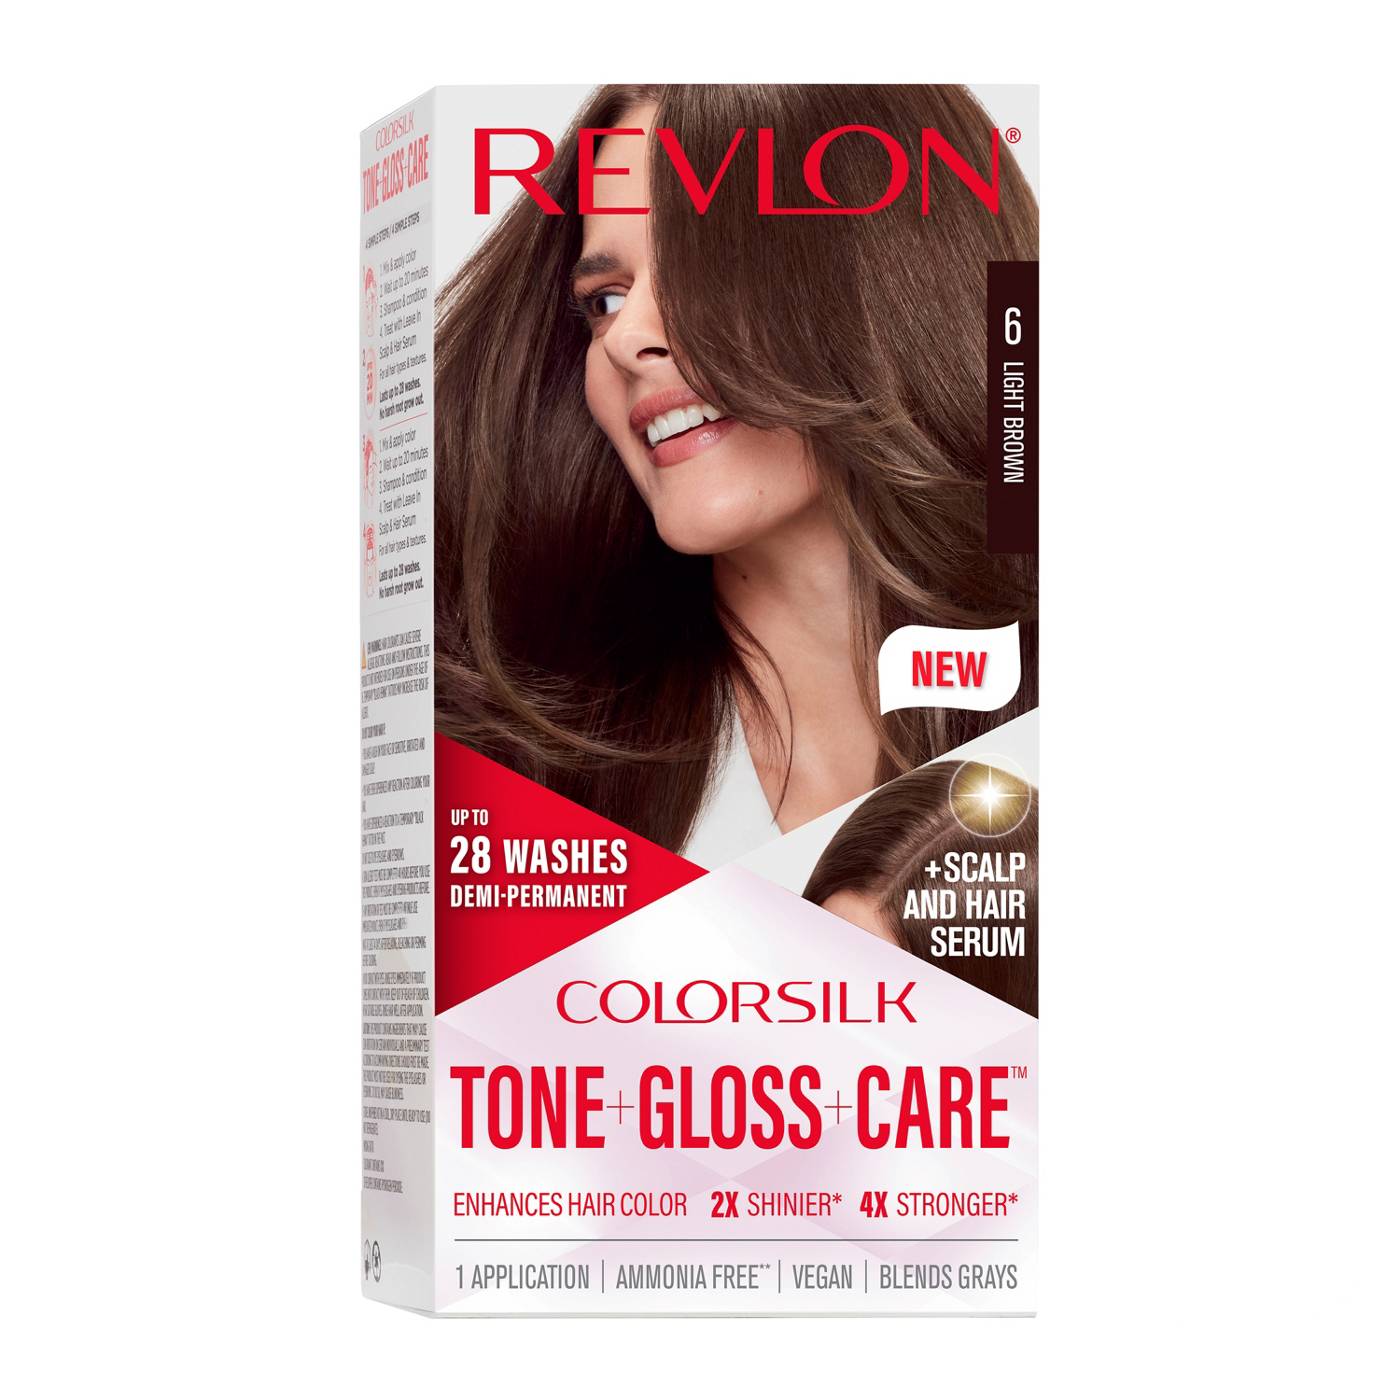 Revlon Colorsilk Tone + Gloss + Care Demi Permanent - Light Brown; image 1 of 6